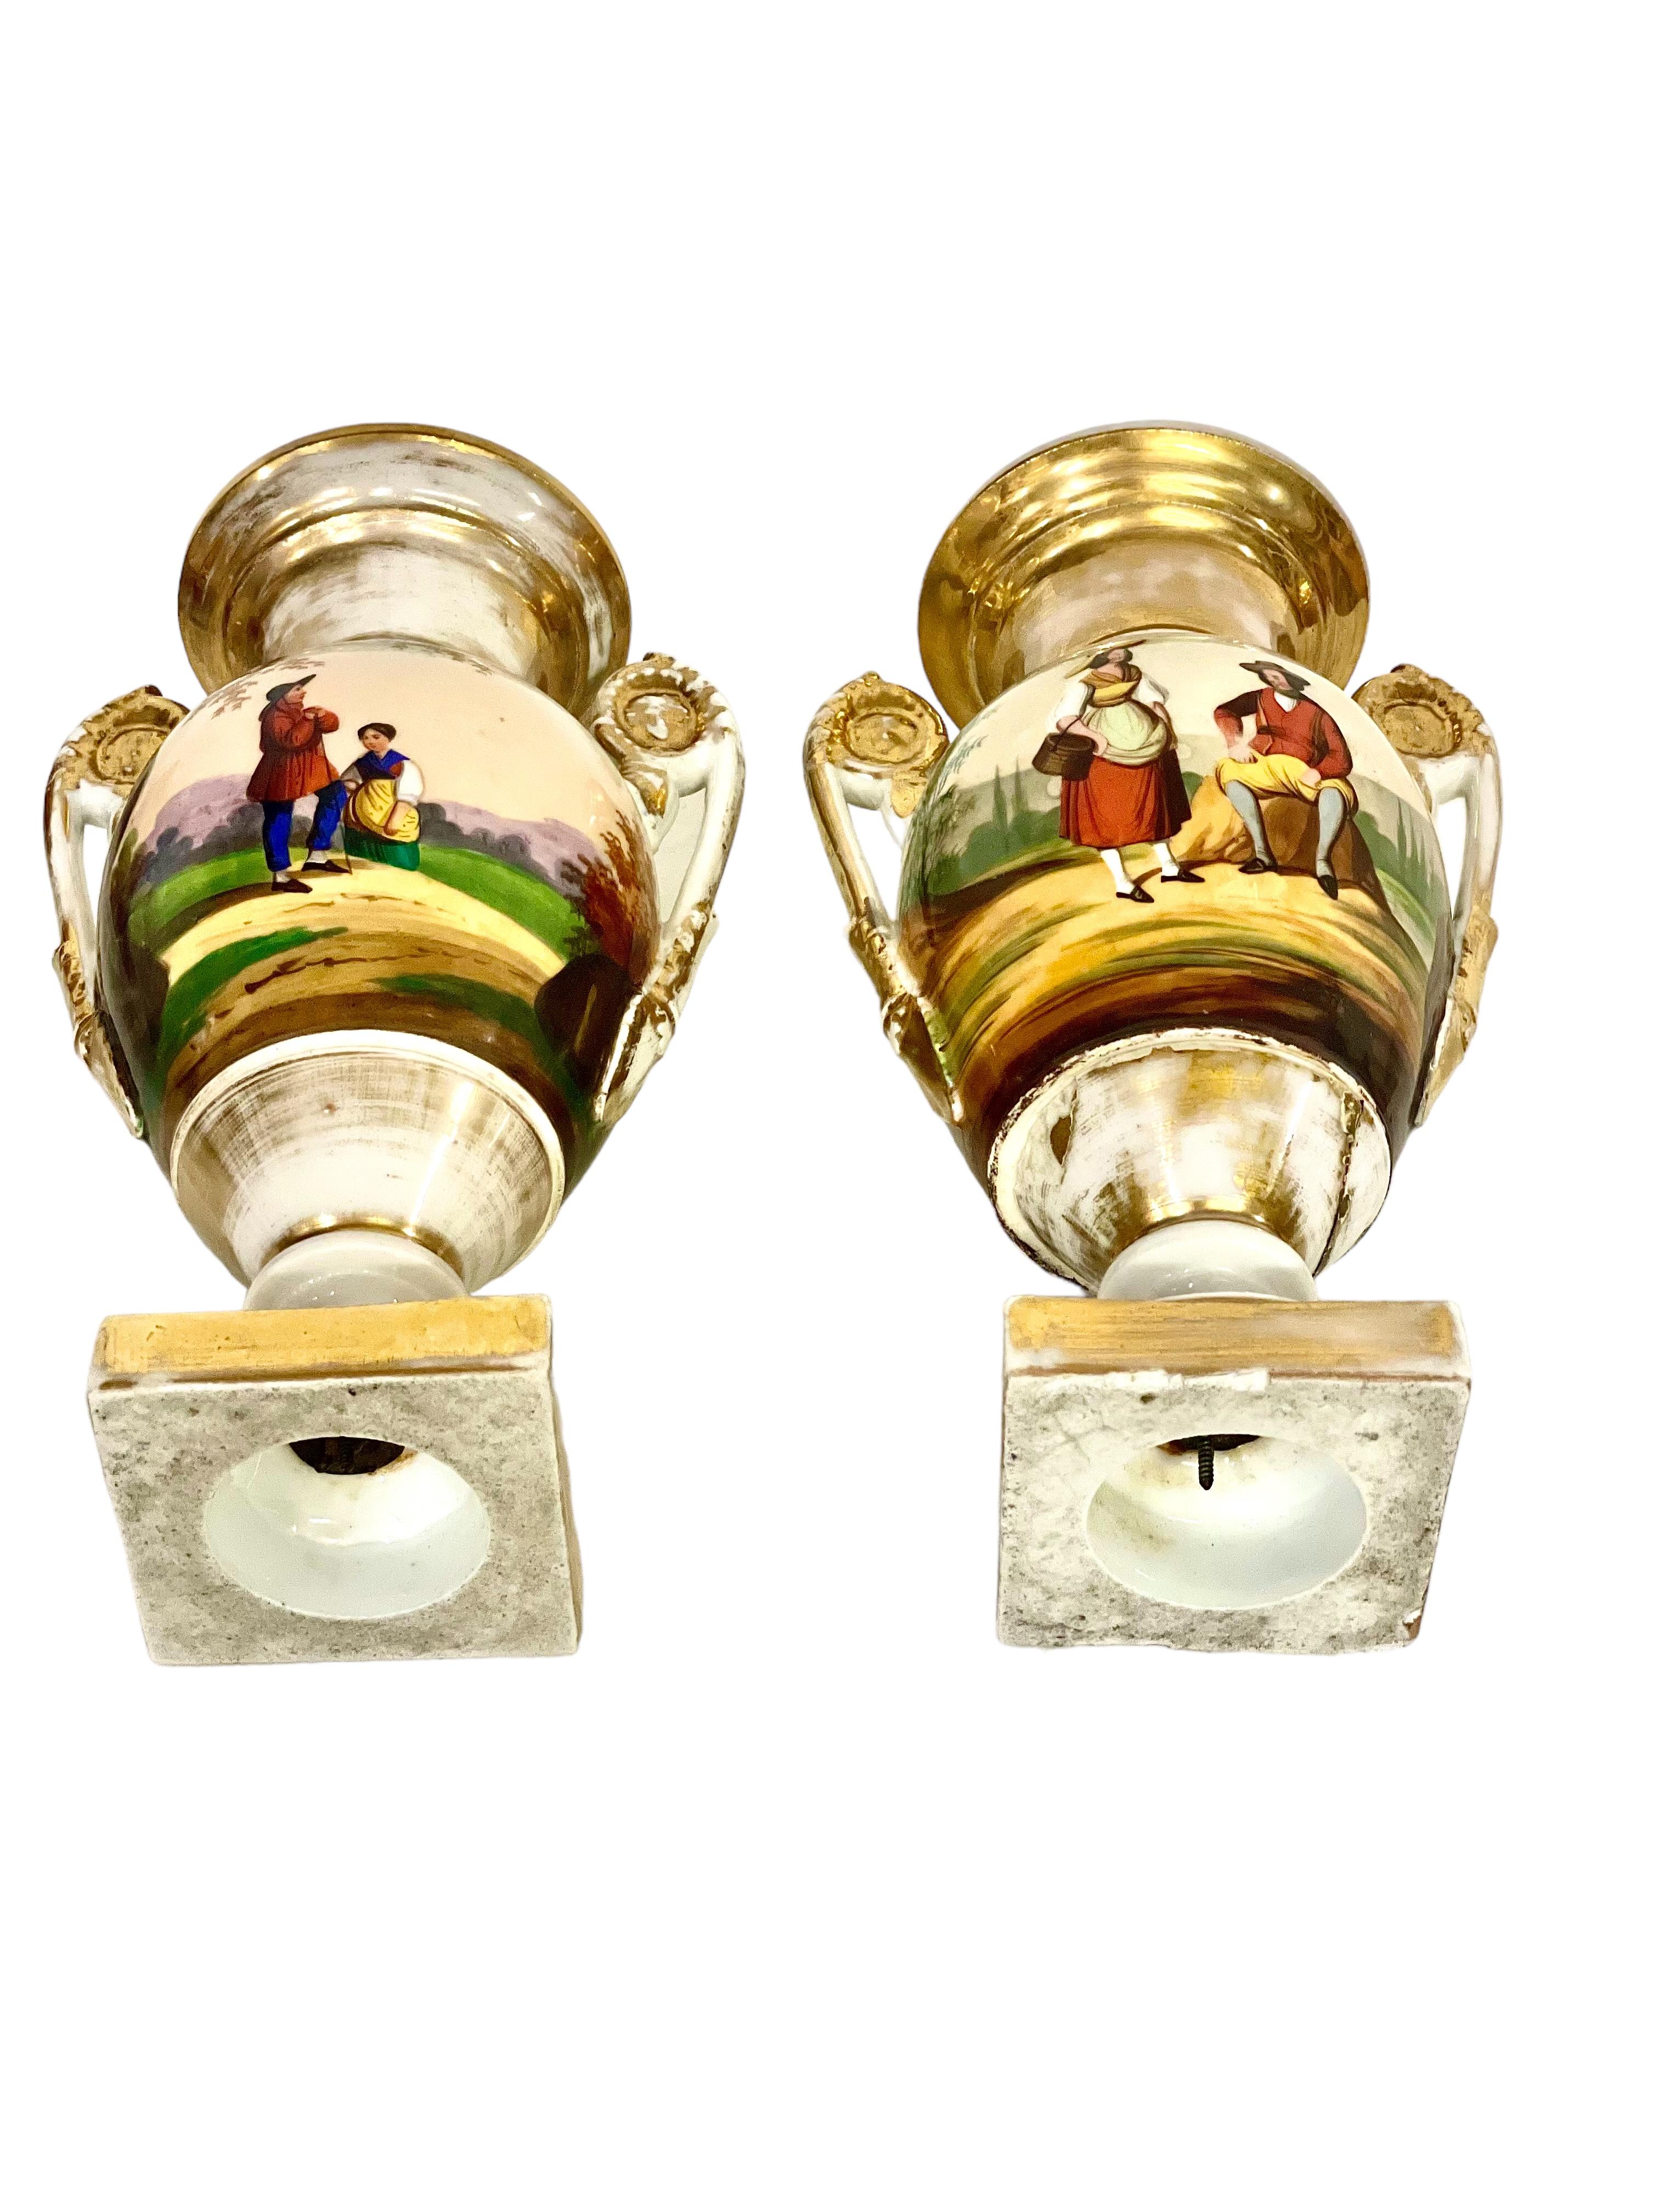 19th Century Pair of Hand-Painted Paris Porcelain Urns  For Sale 8